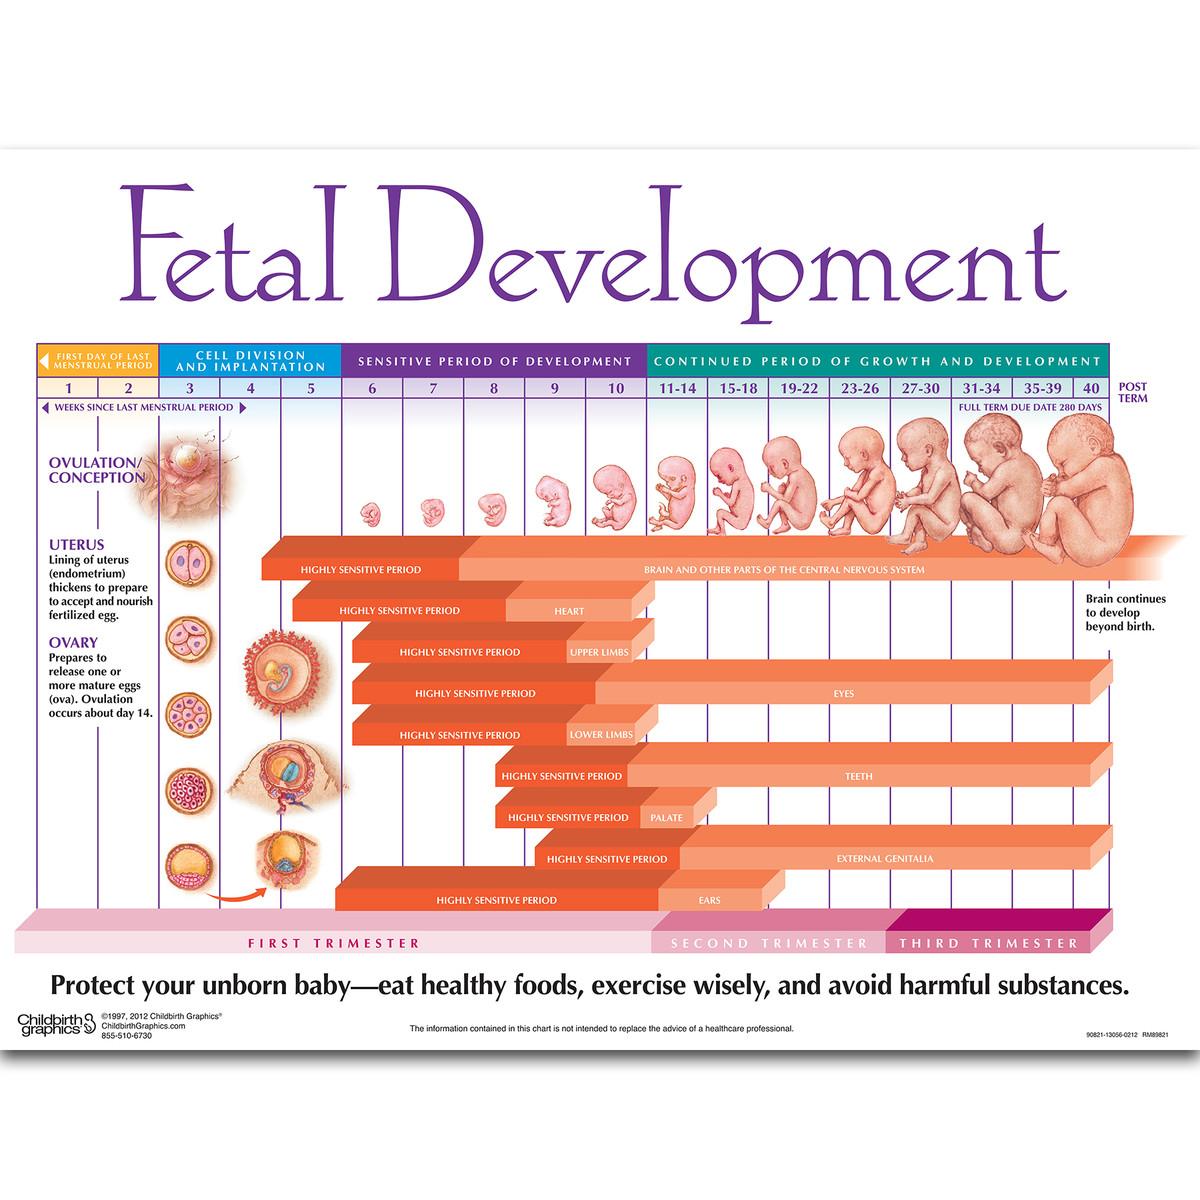 90821-Fetal-Development-Chart_media-01.jpg?resizeid=7&resizeh=1200&resizew=1200